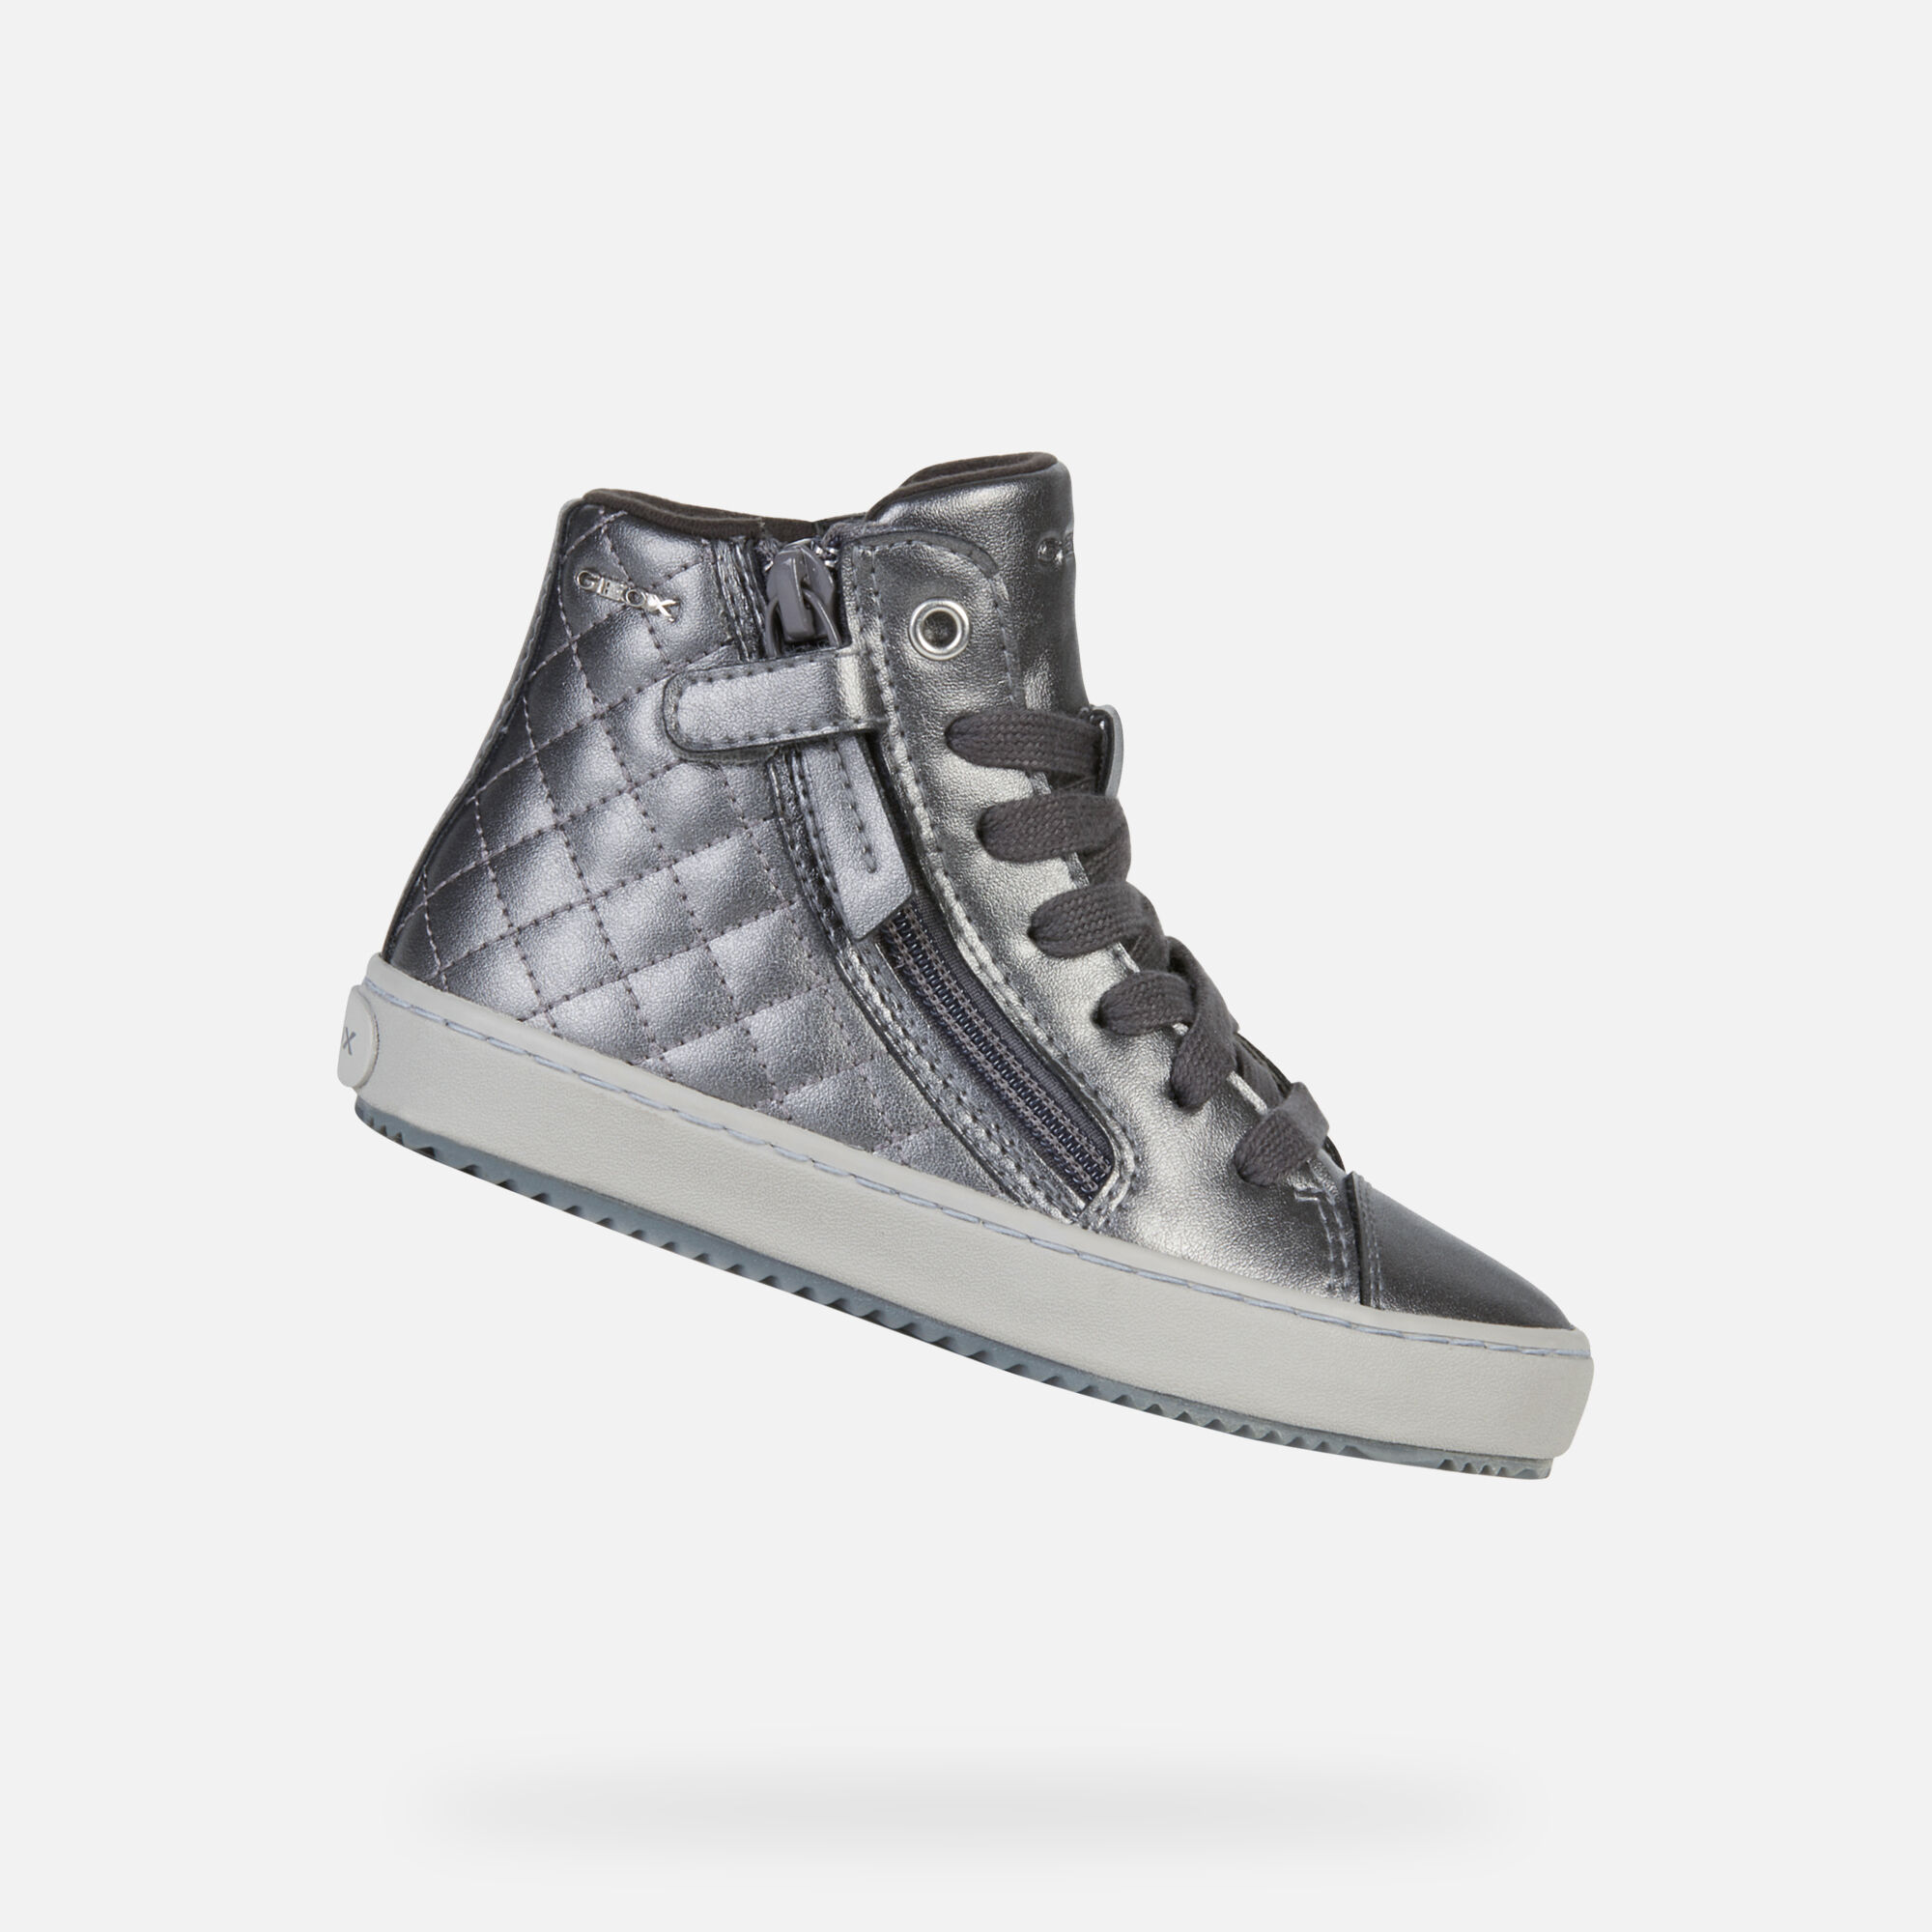 girls gray sneakers